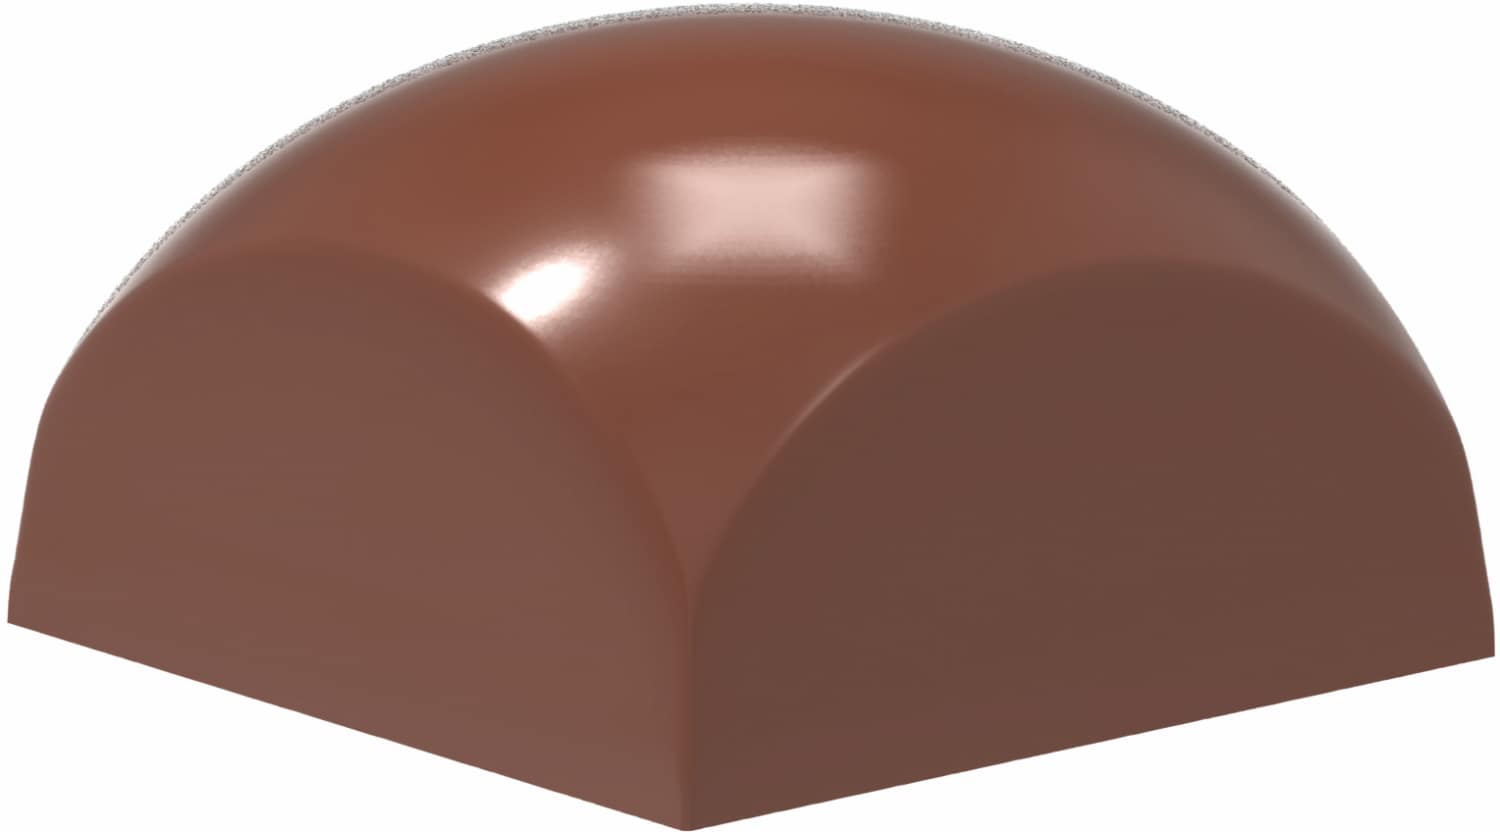 Schokoladenform "Keks" 421865